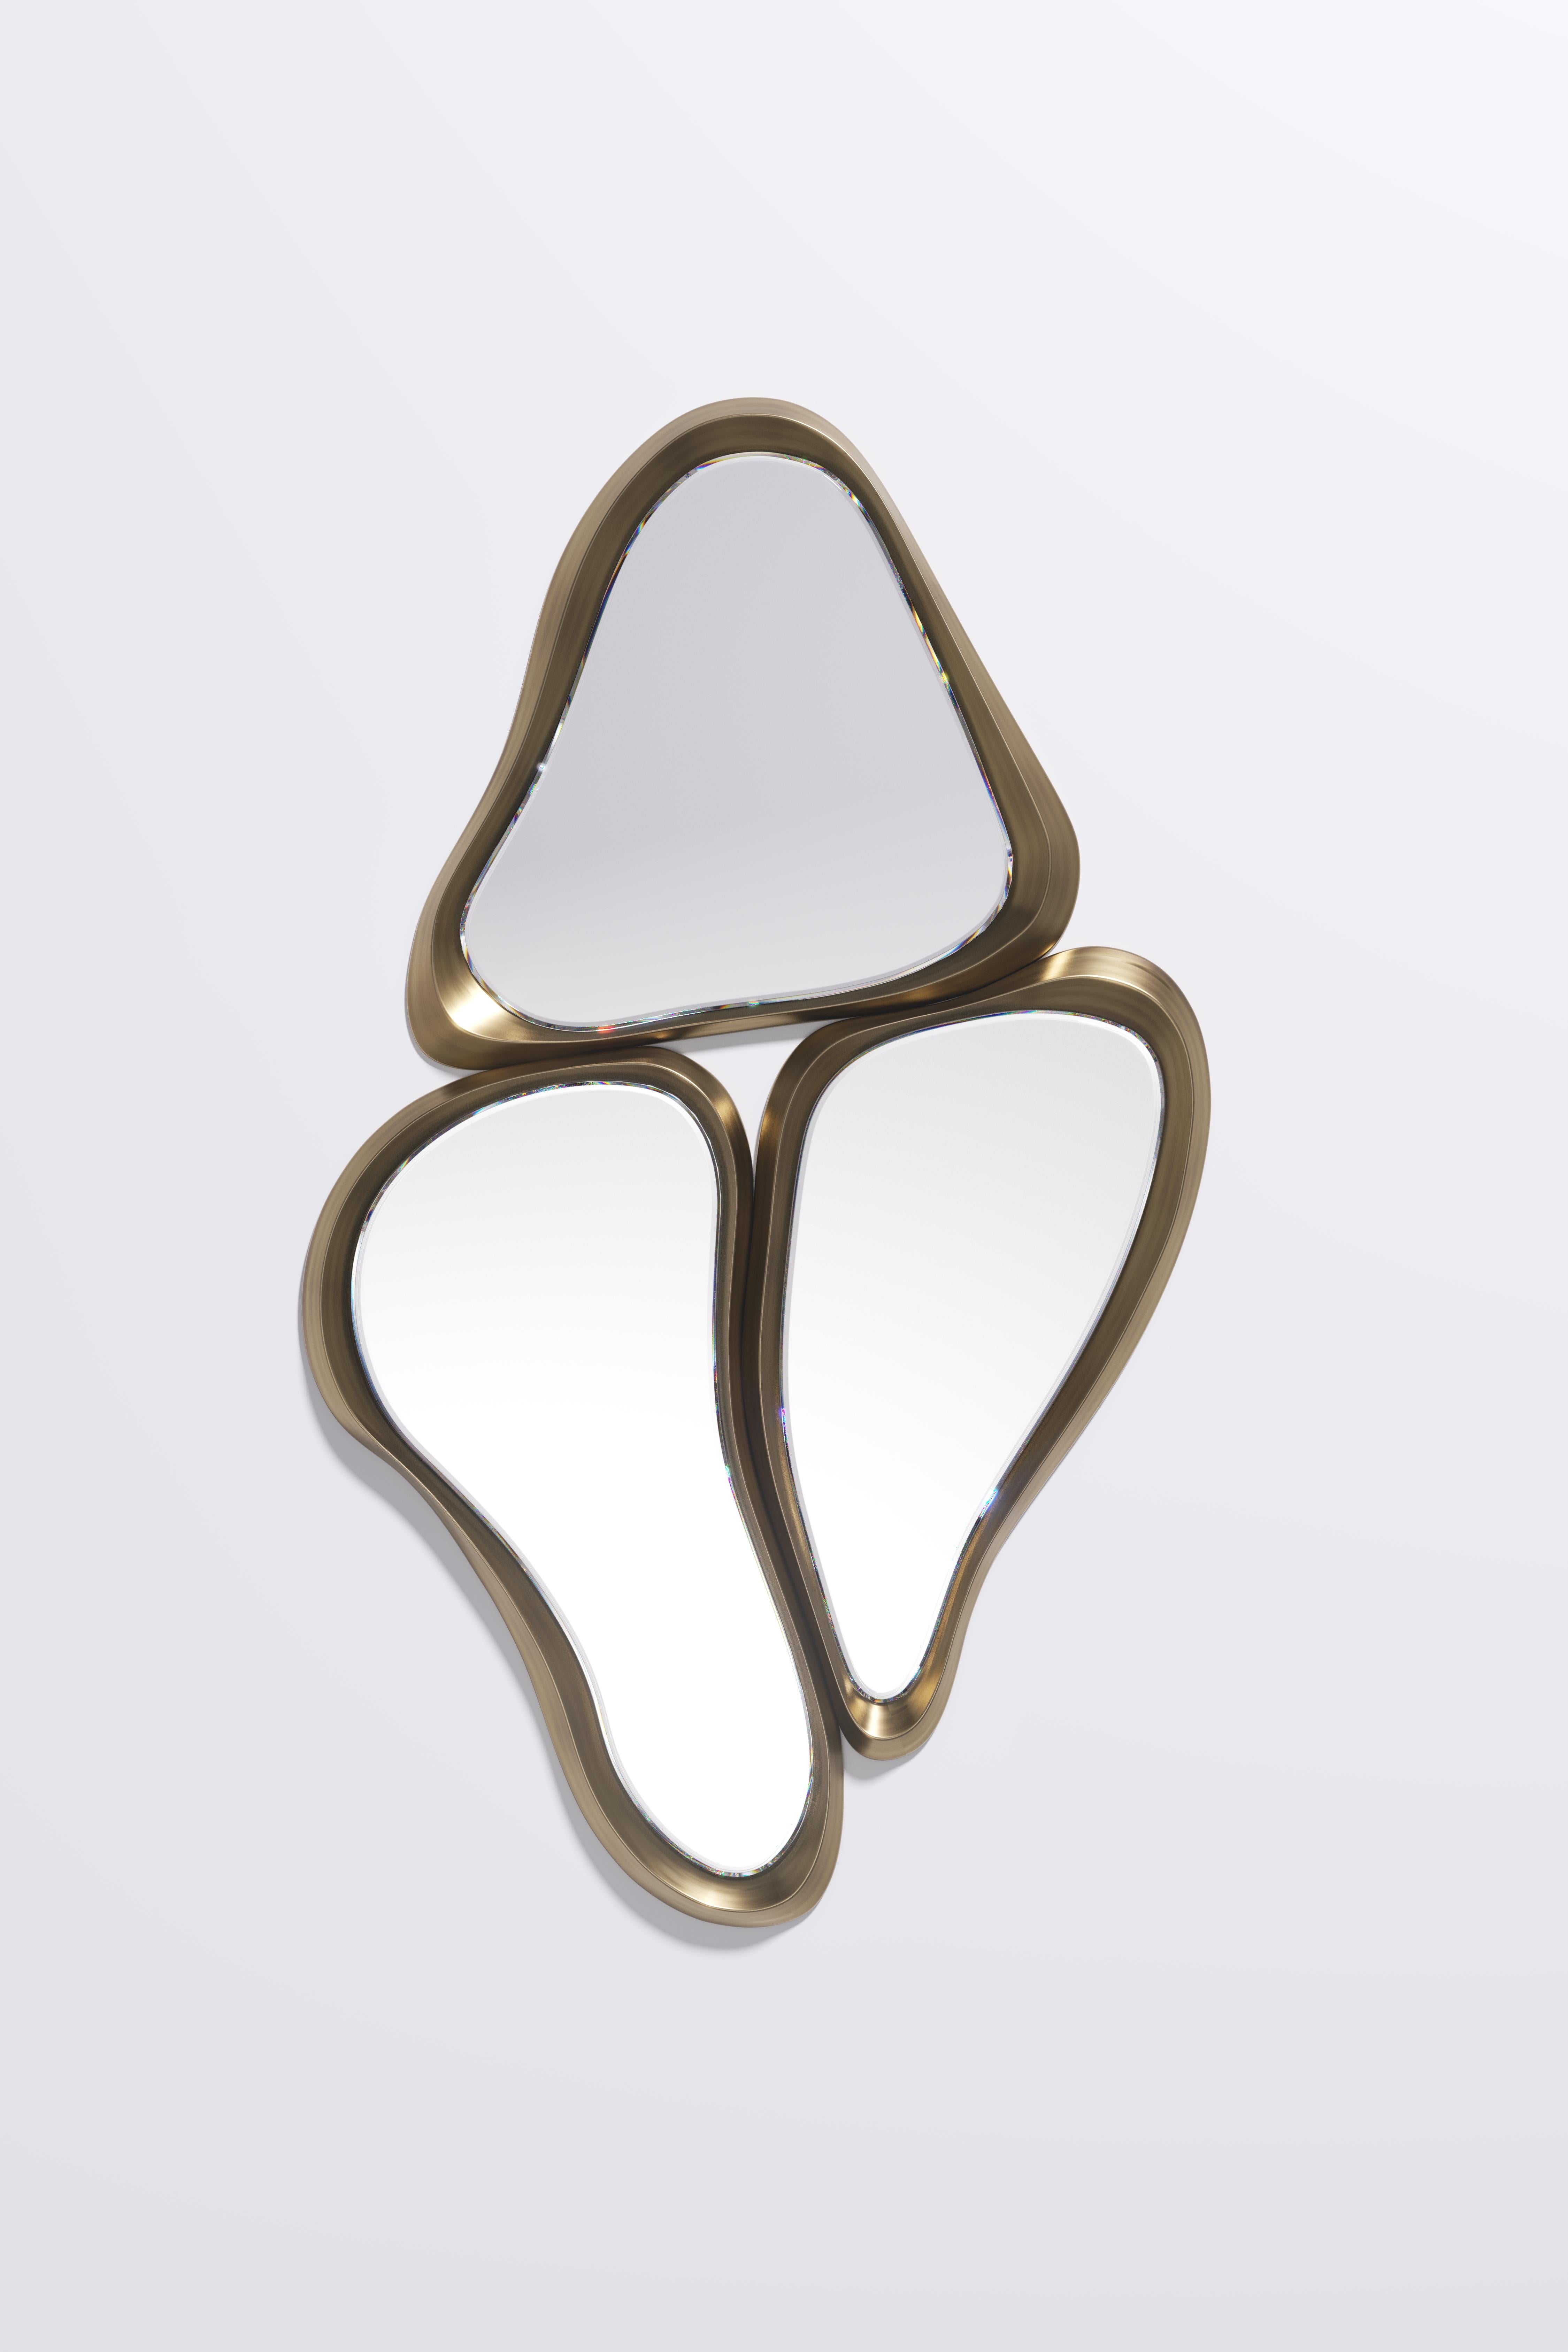 Art Deco Sculptural Mirror in Cream Shagreen and Bronze-Patina Brass by Kifu Paris For Sale